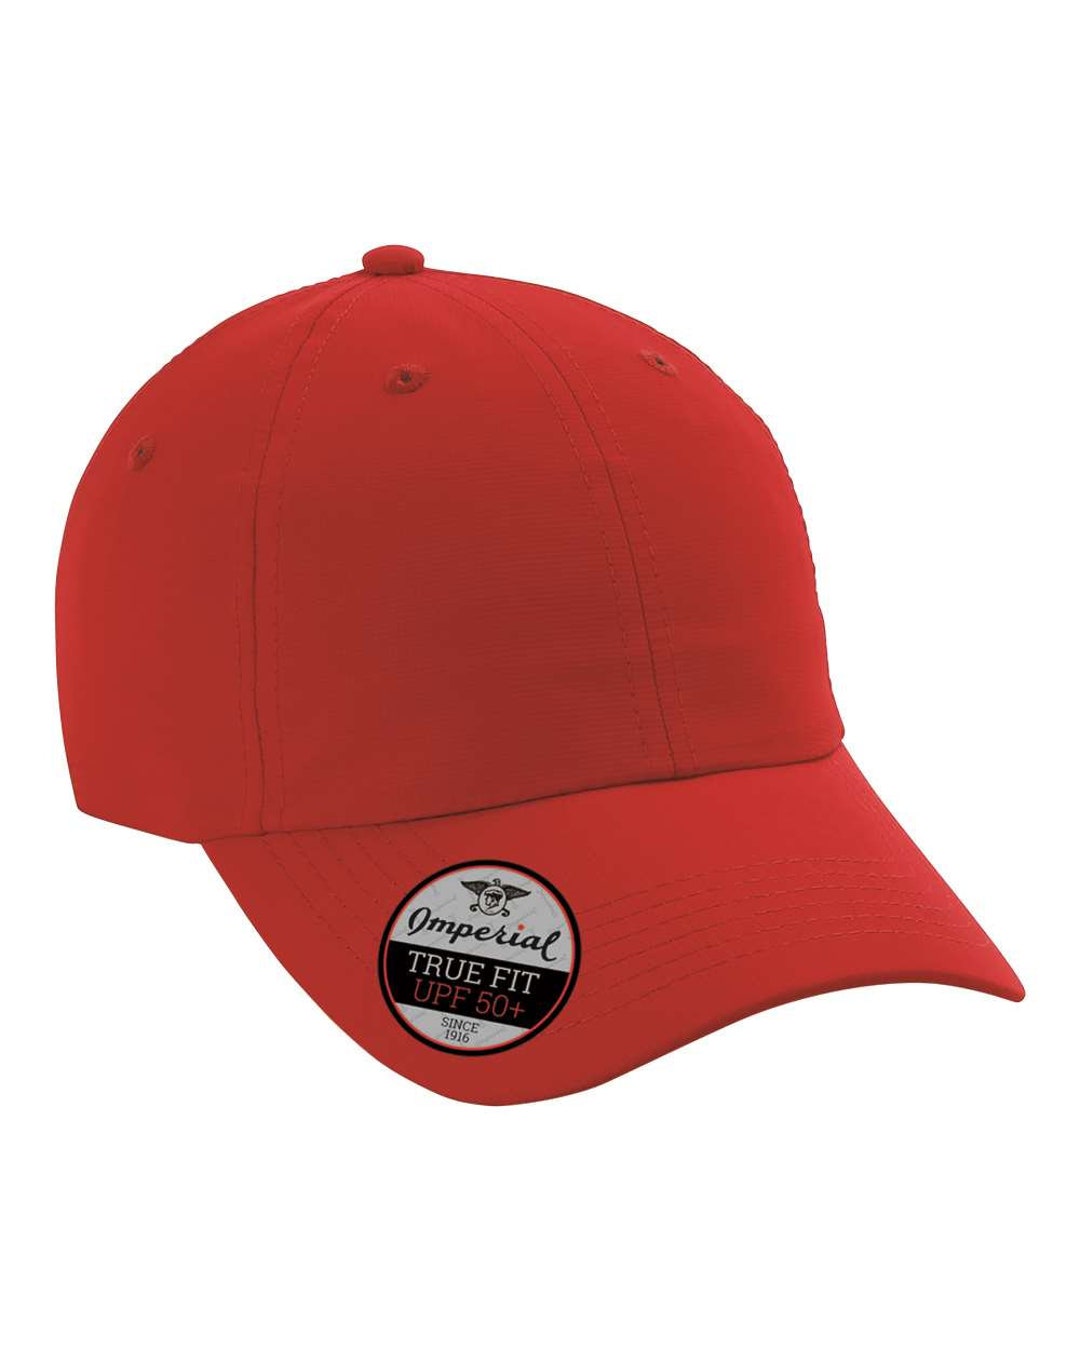 Custom Snapback Hats, No Minimum, Competitive Price